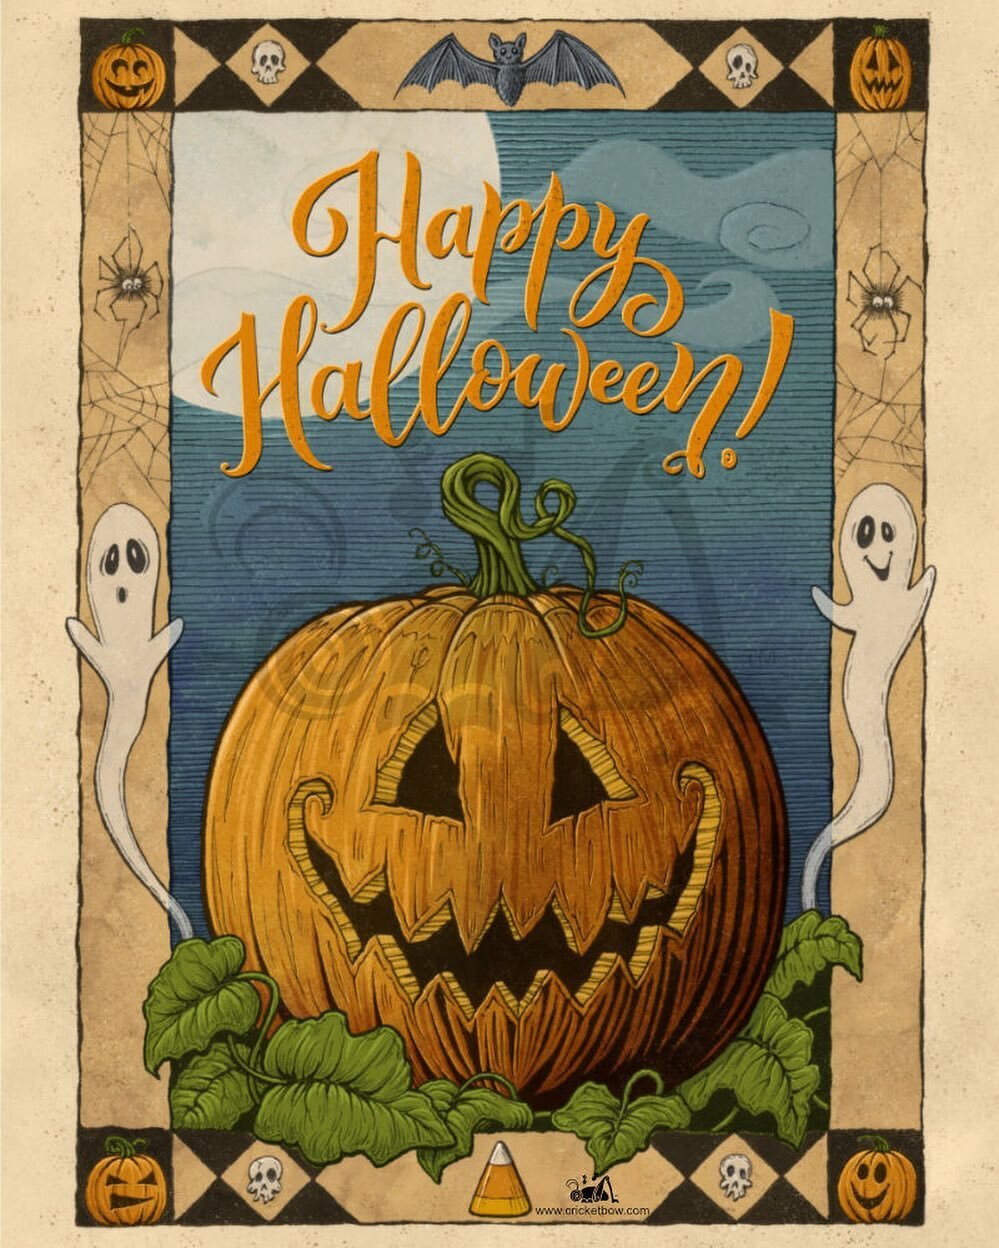 I wish everyone a spooky and fantastic Halloween! 🎃 👻
#halloween #happyhalloween #halloweenart #halloweencards #pumpkin #jackolantern #halloweenillustration